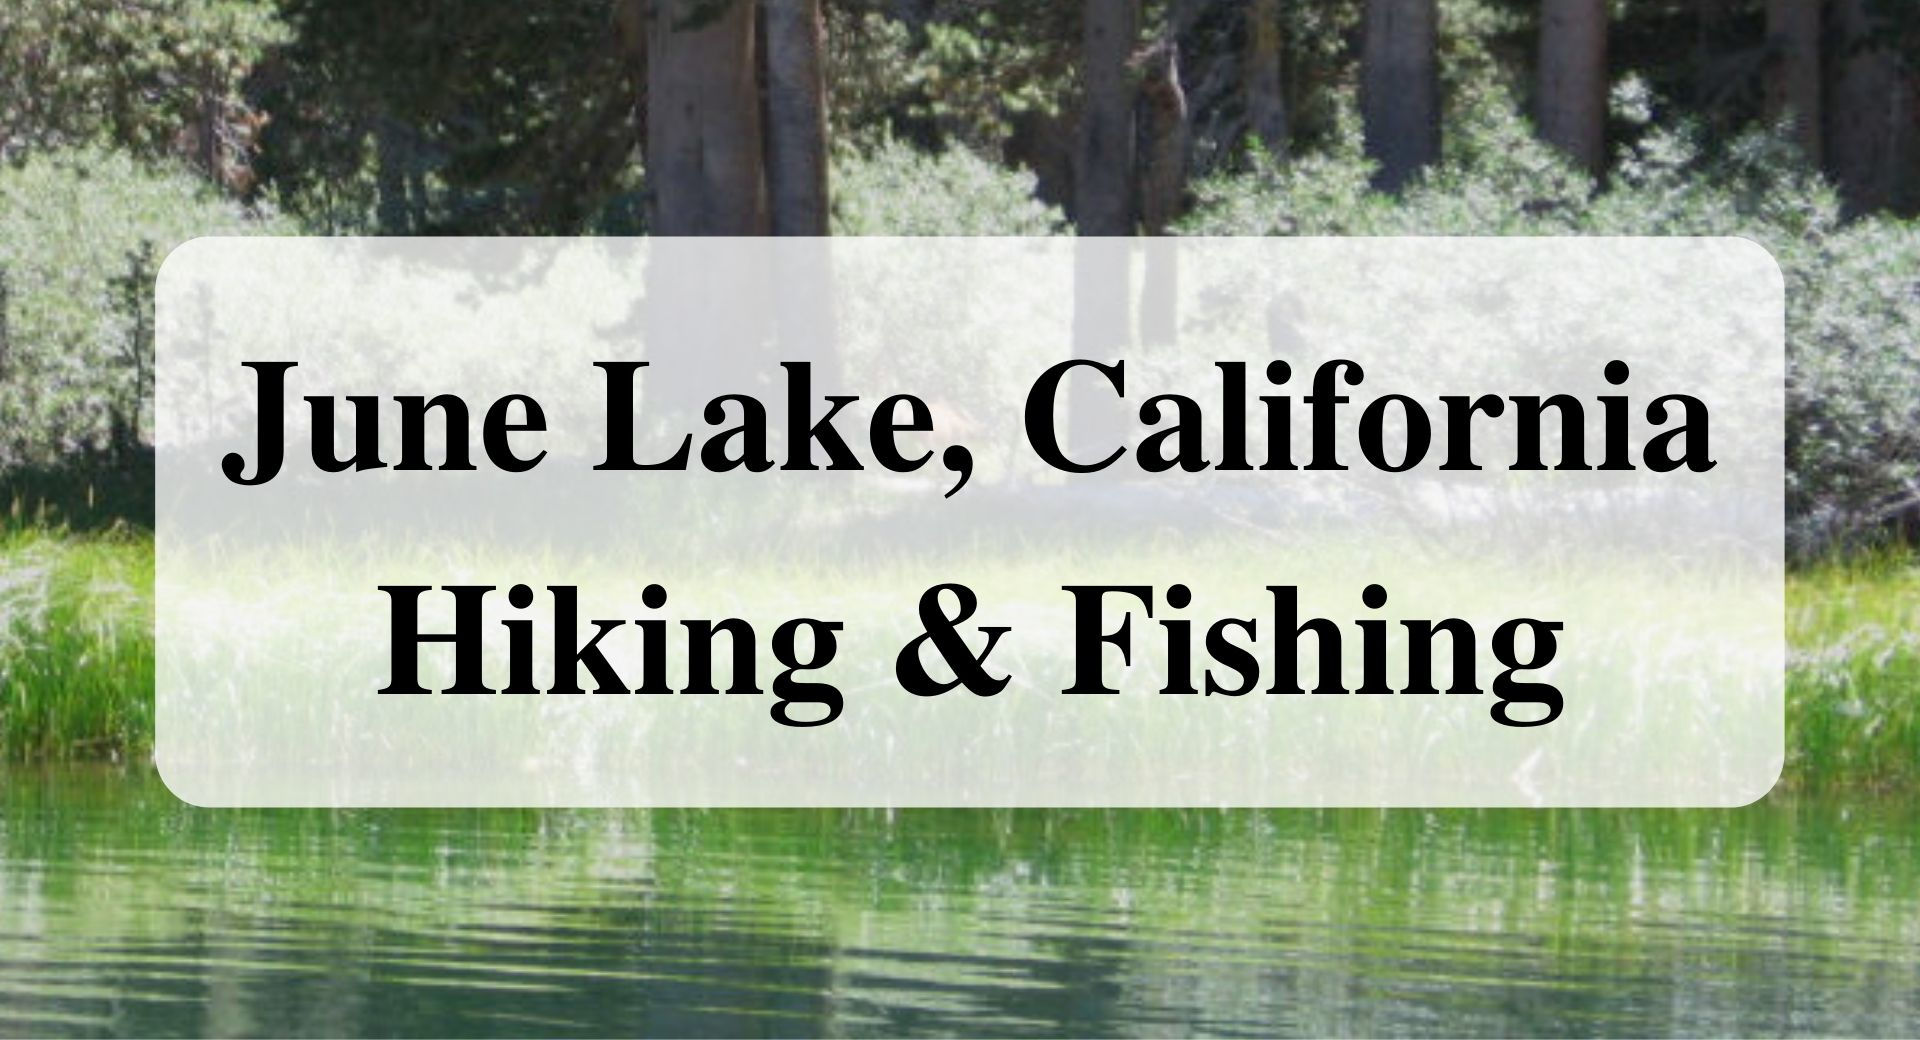 June Lake, California Hiking & Fishing Main